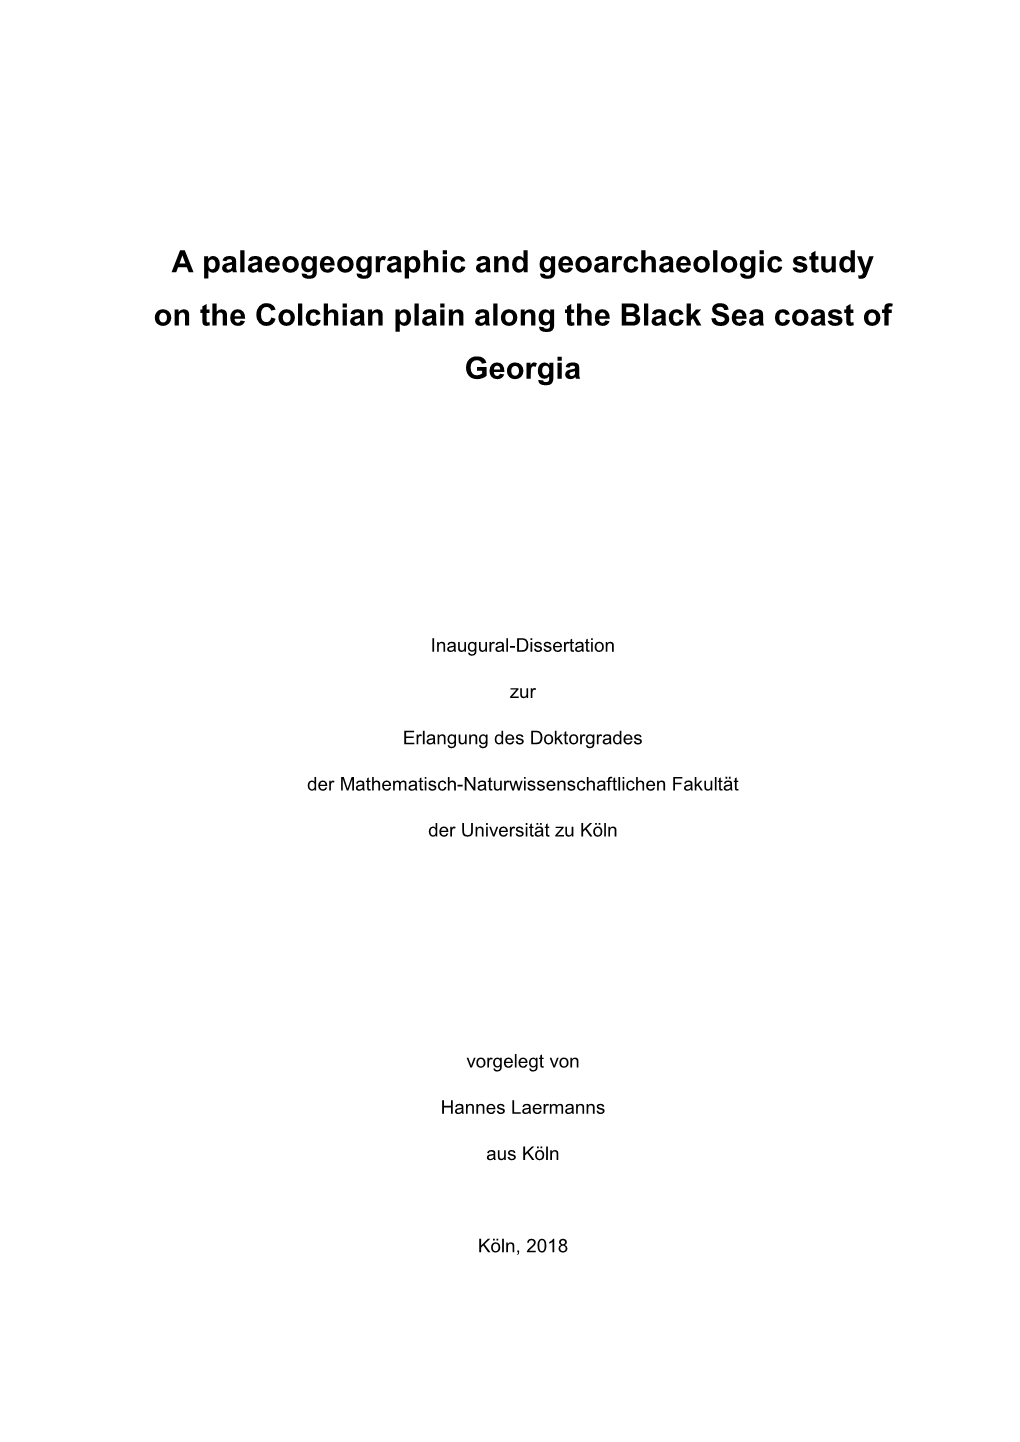 A Palaeogeographic and Geoarchaeologic Study on the Colchian Plain Along the Black Sea Coast of Georgia